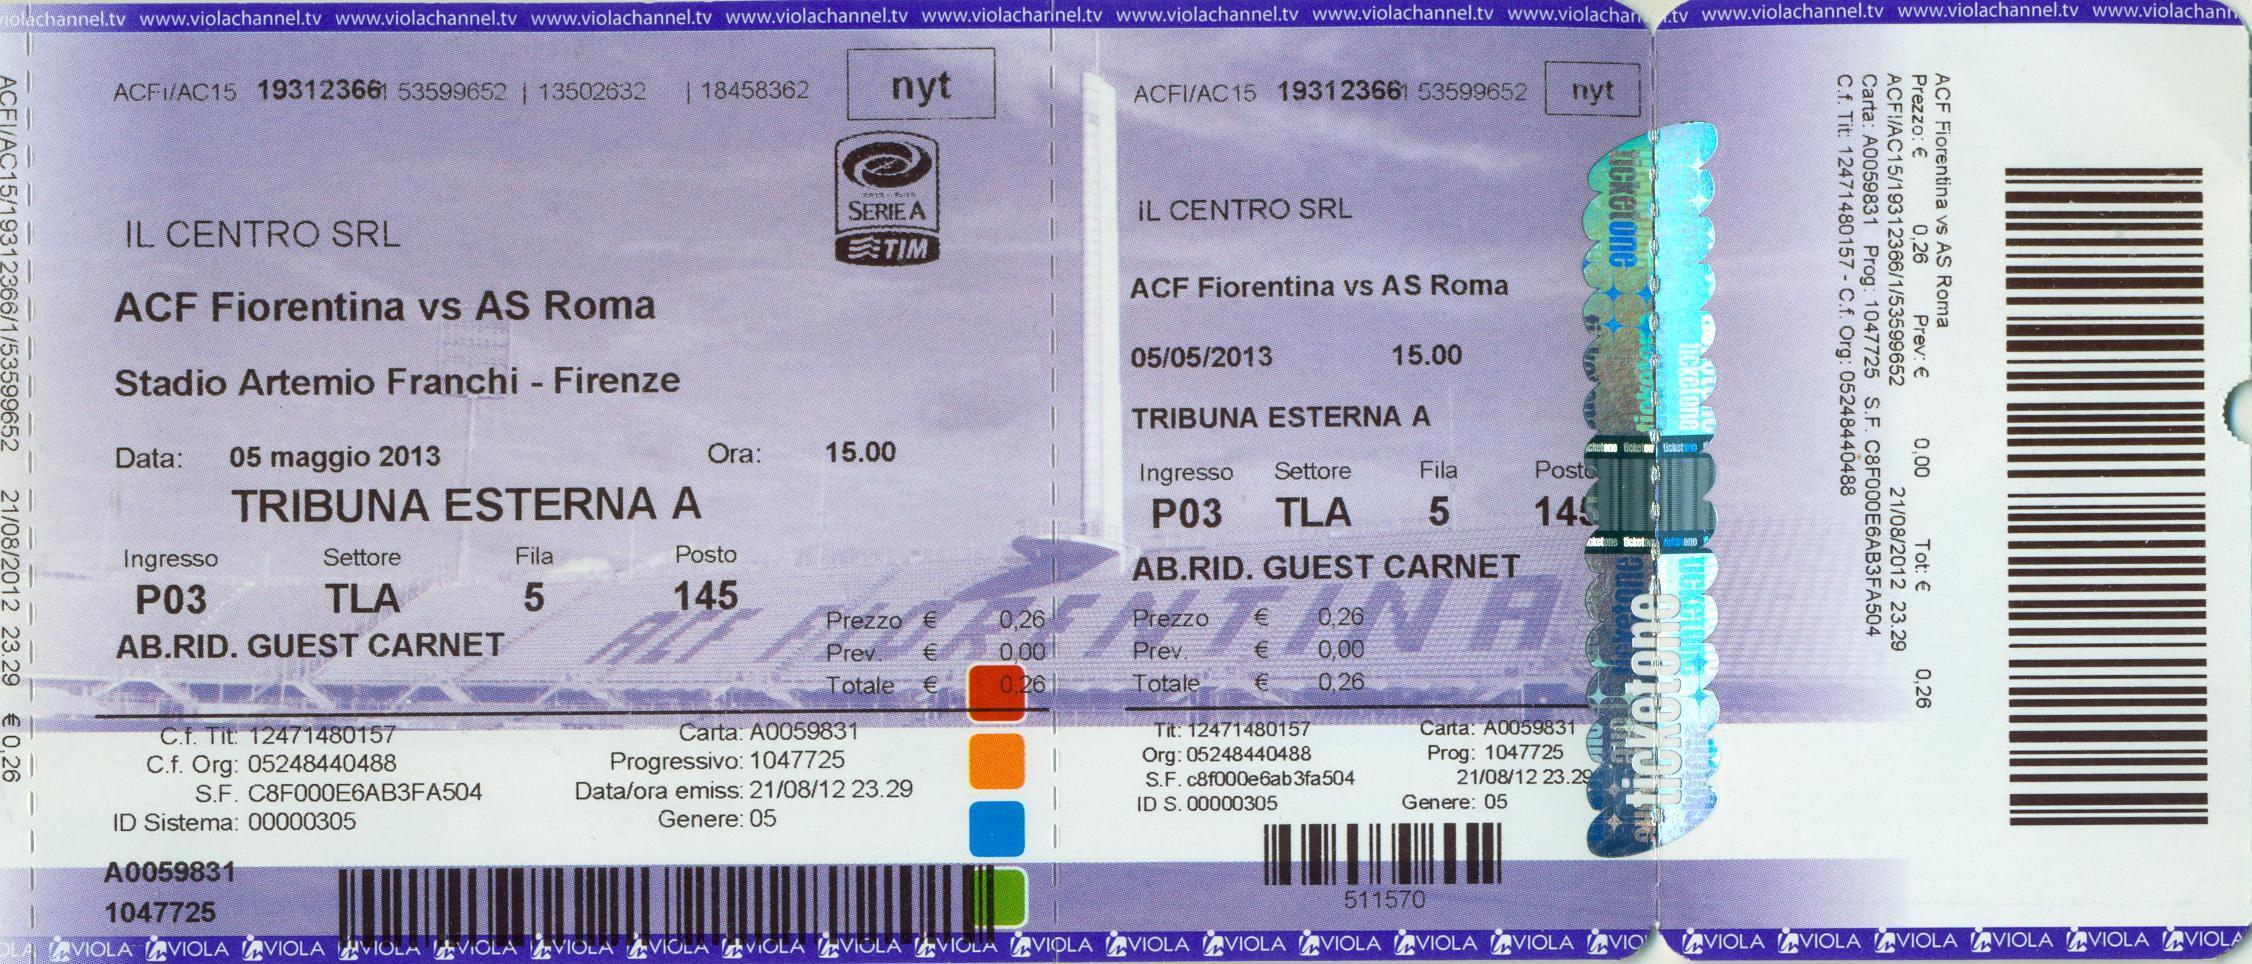 biglietti 2012 13